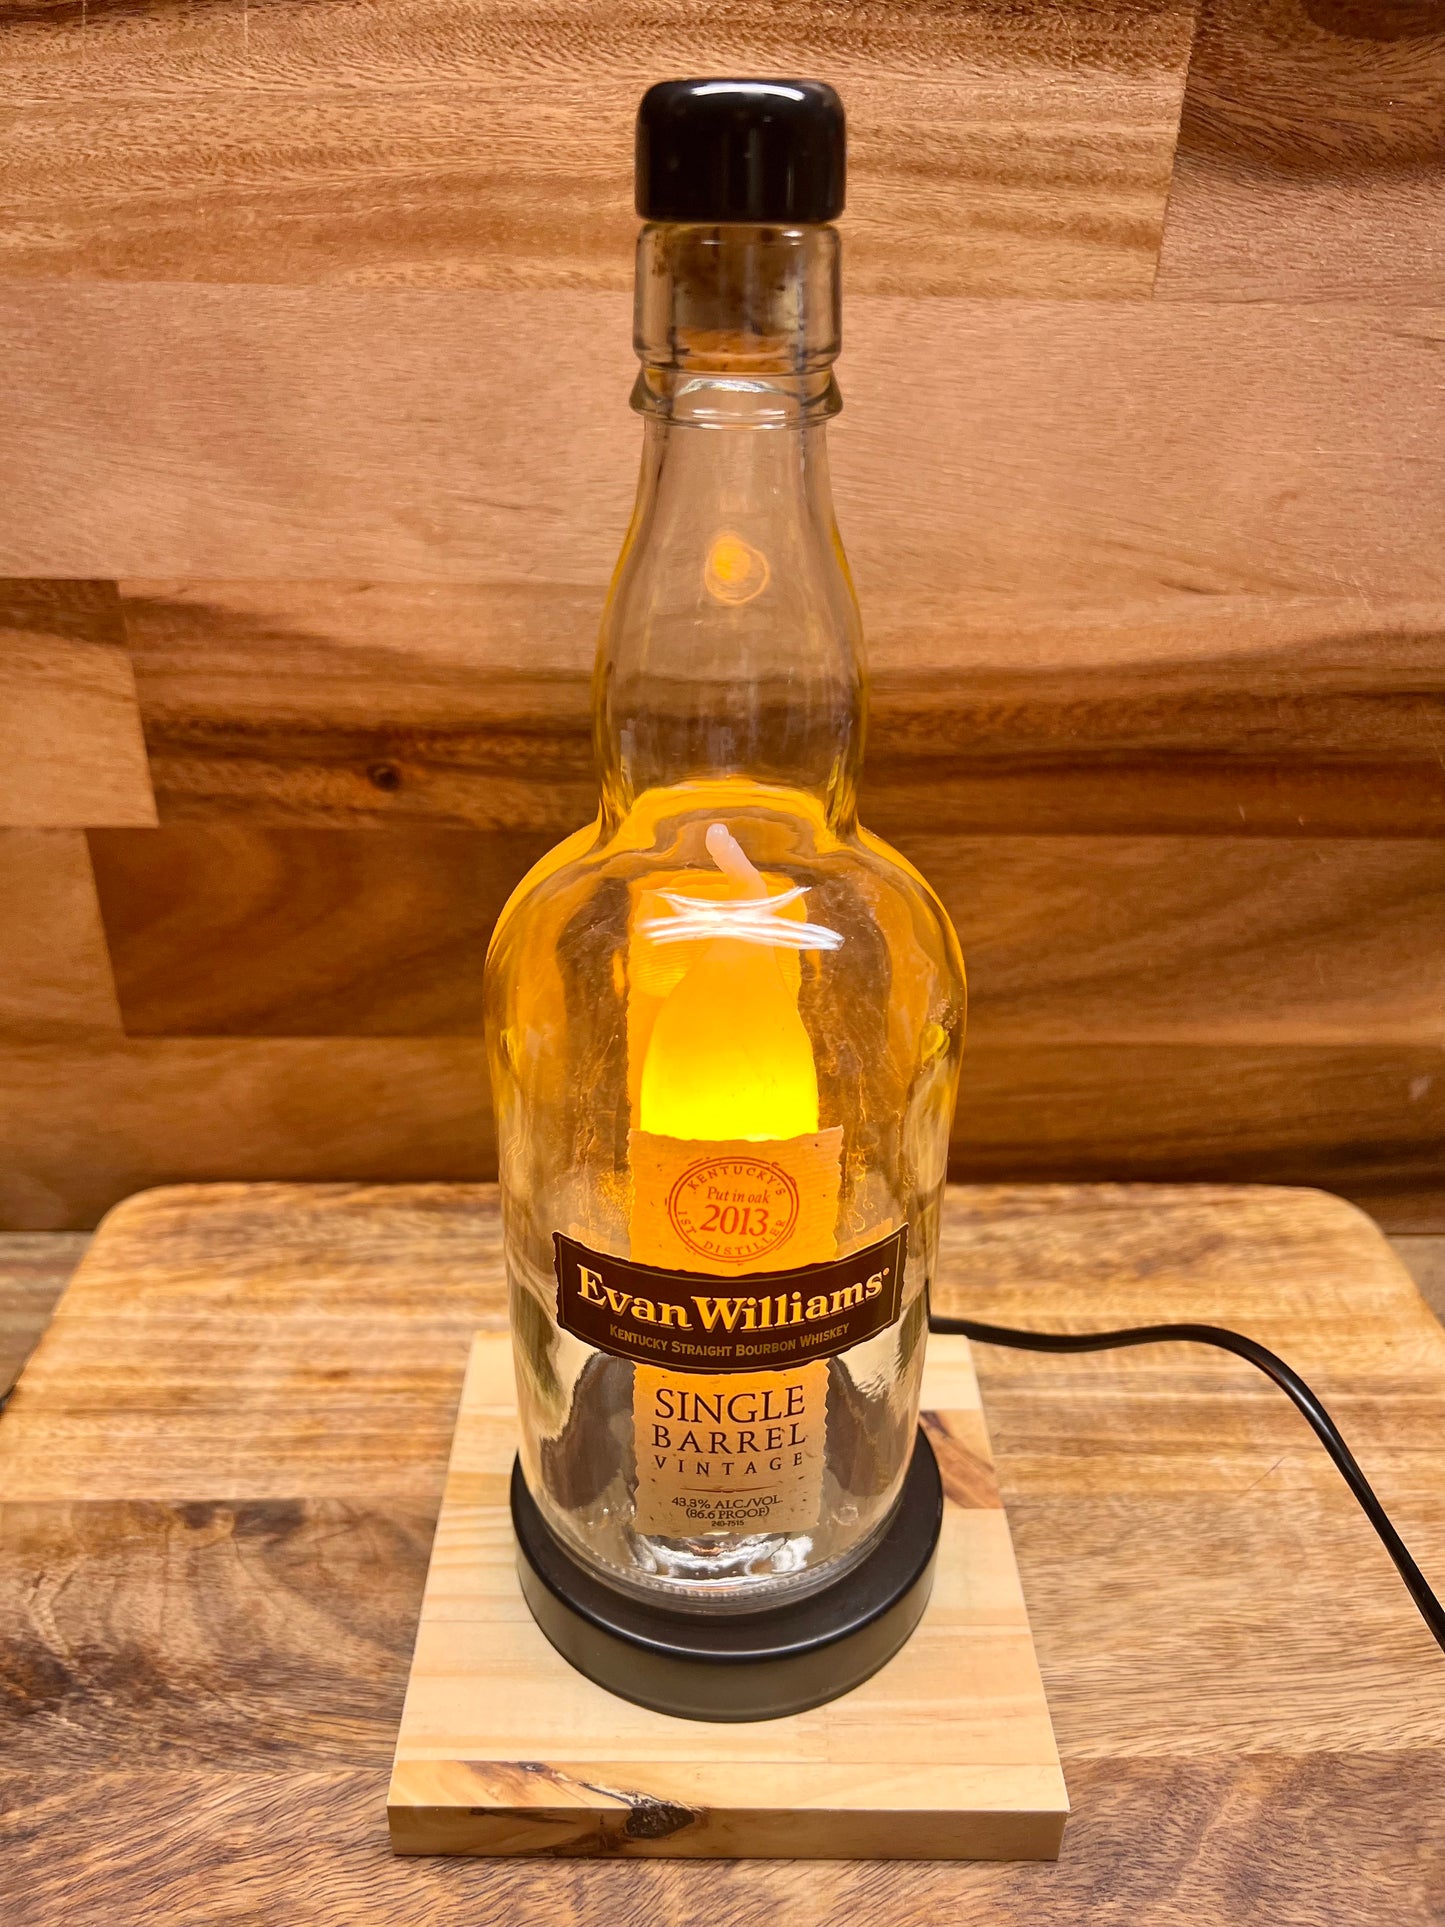 Evan Williams Bottle Lamp